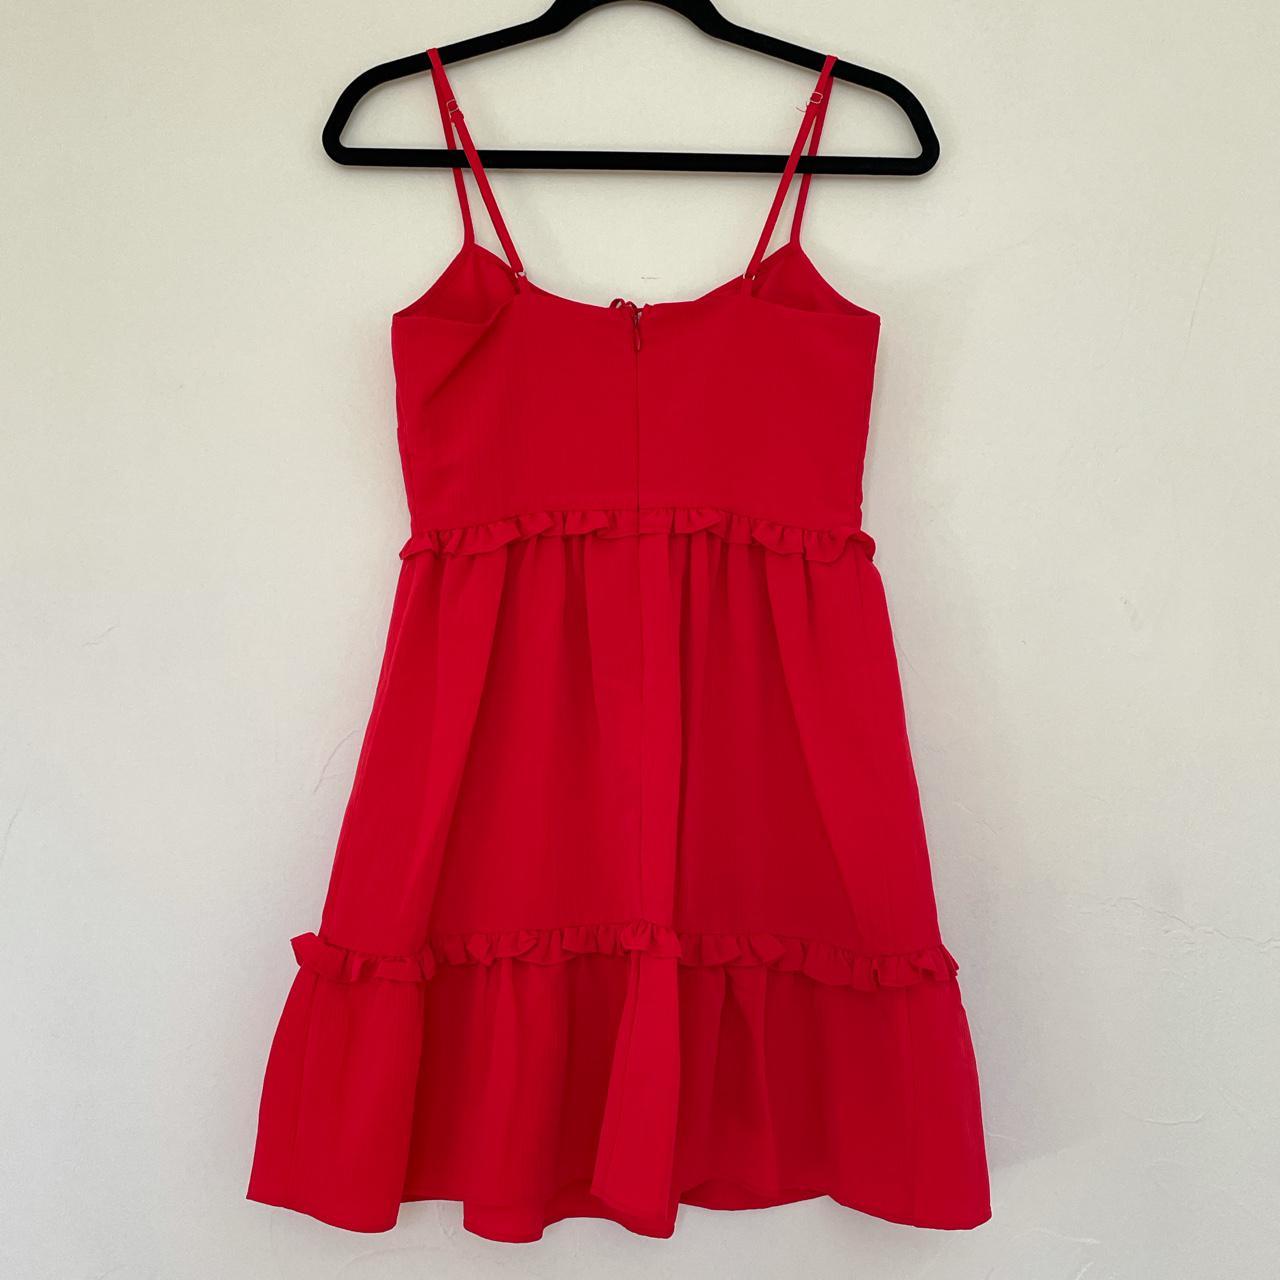 Product Image 2 - BCBGeneration red mini dress.
Adjustable straps.